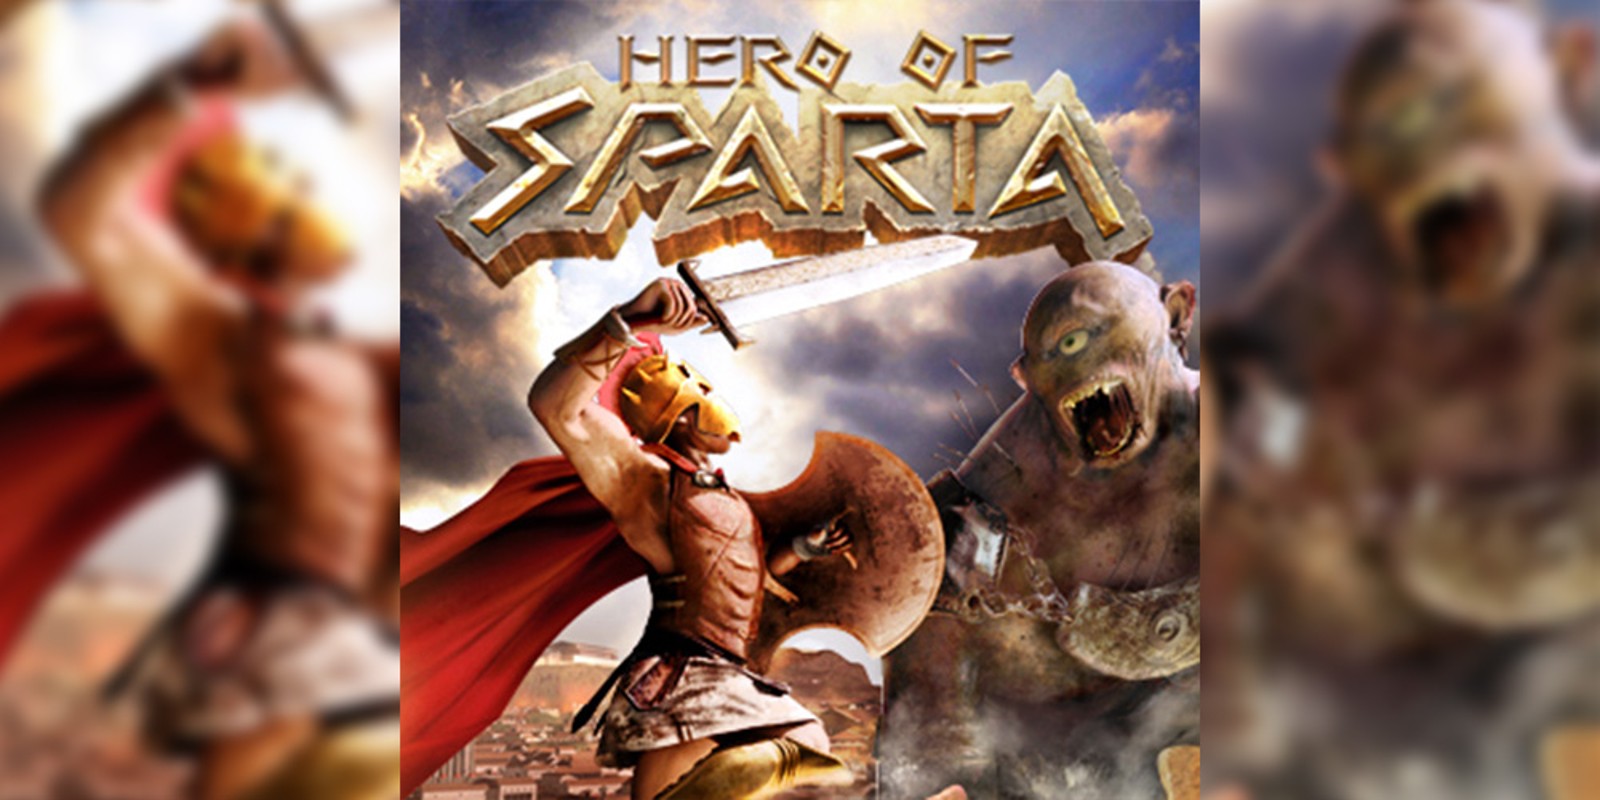 Hero of Sparta